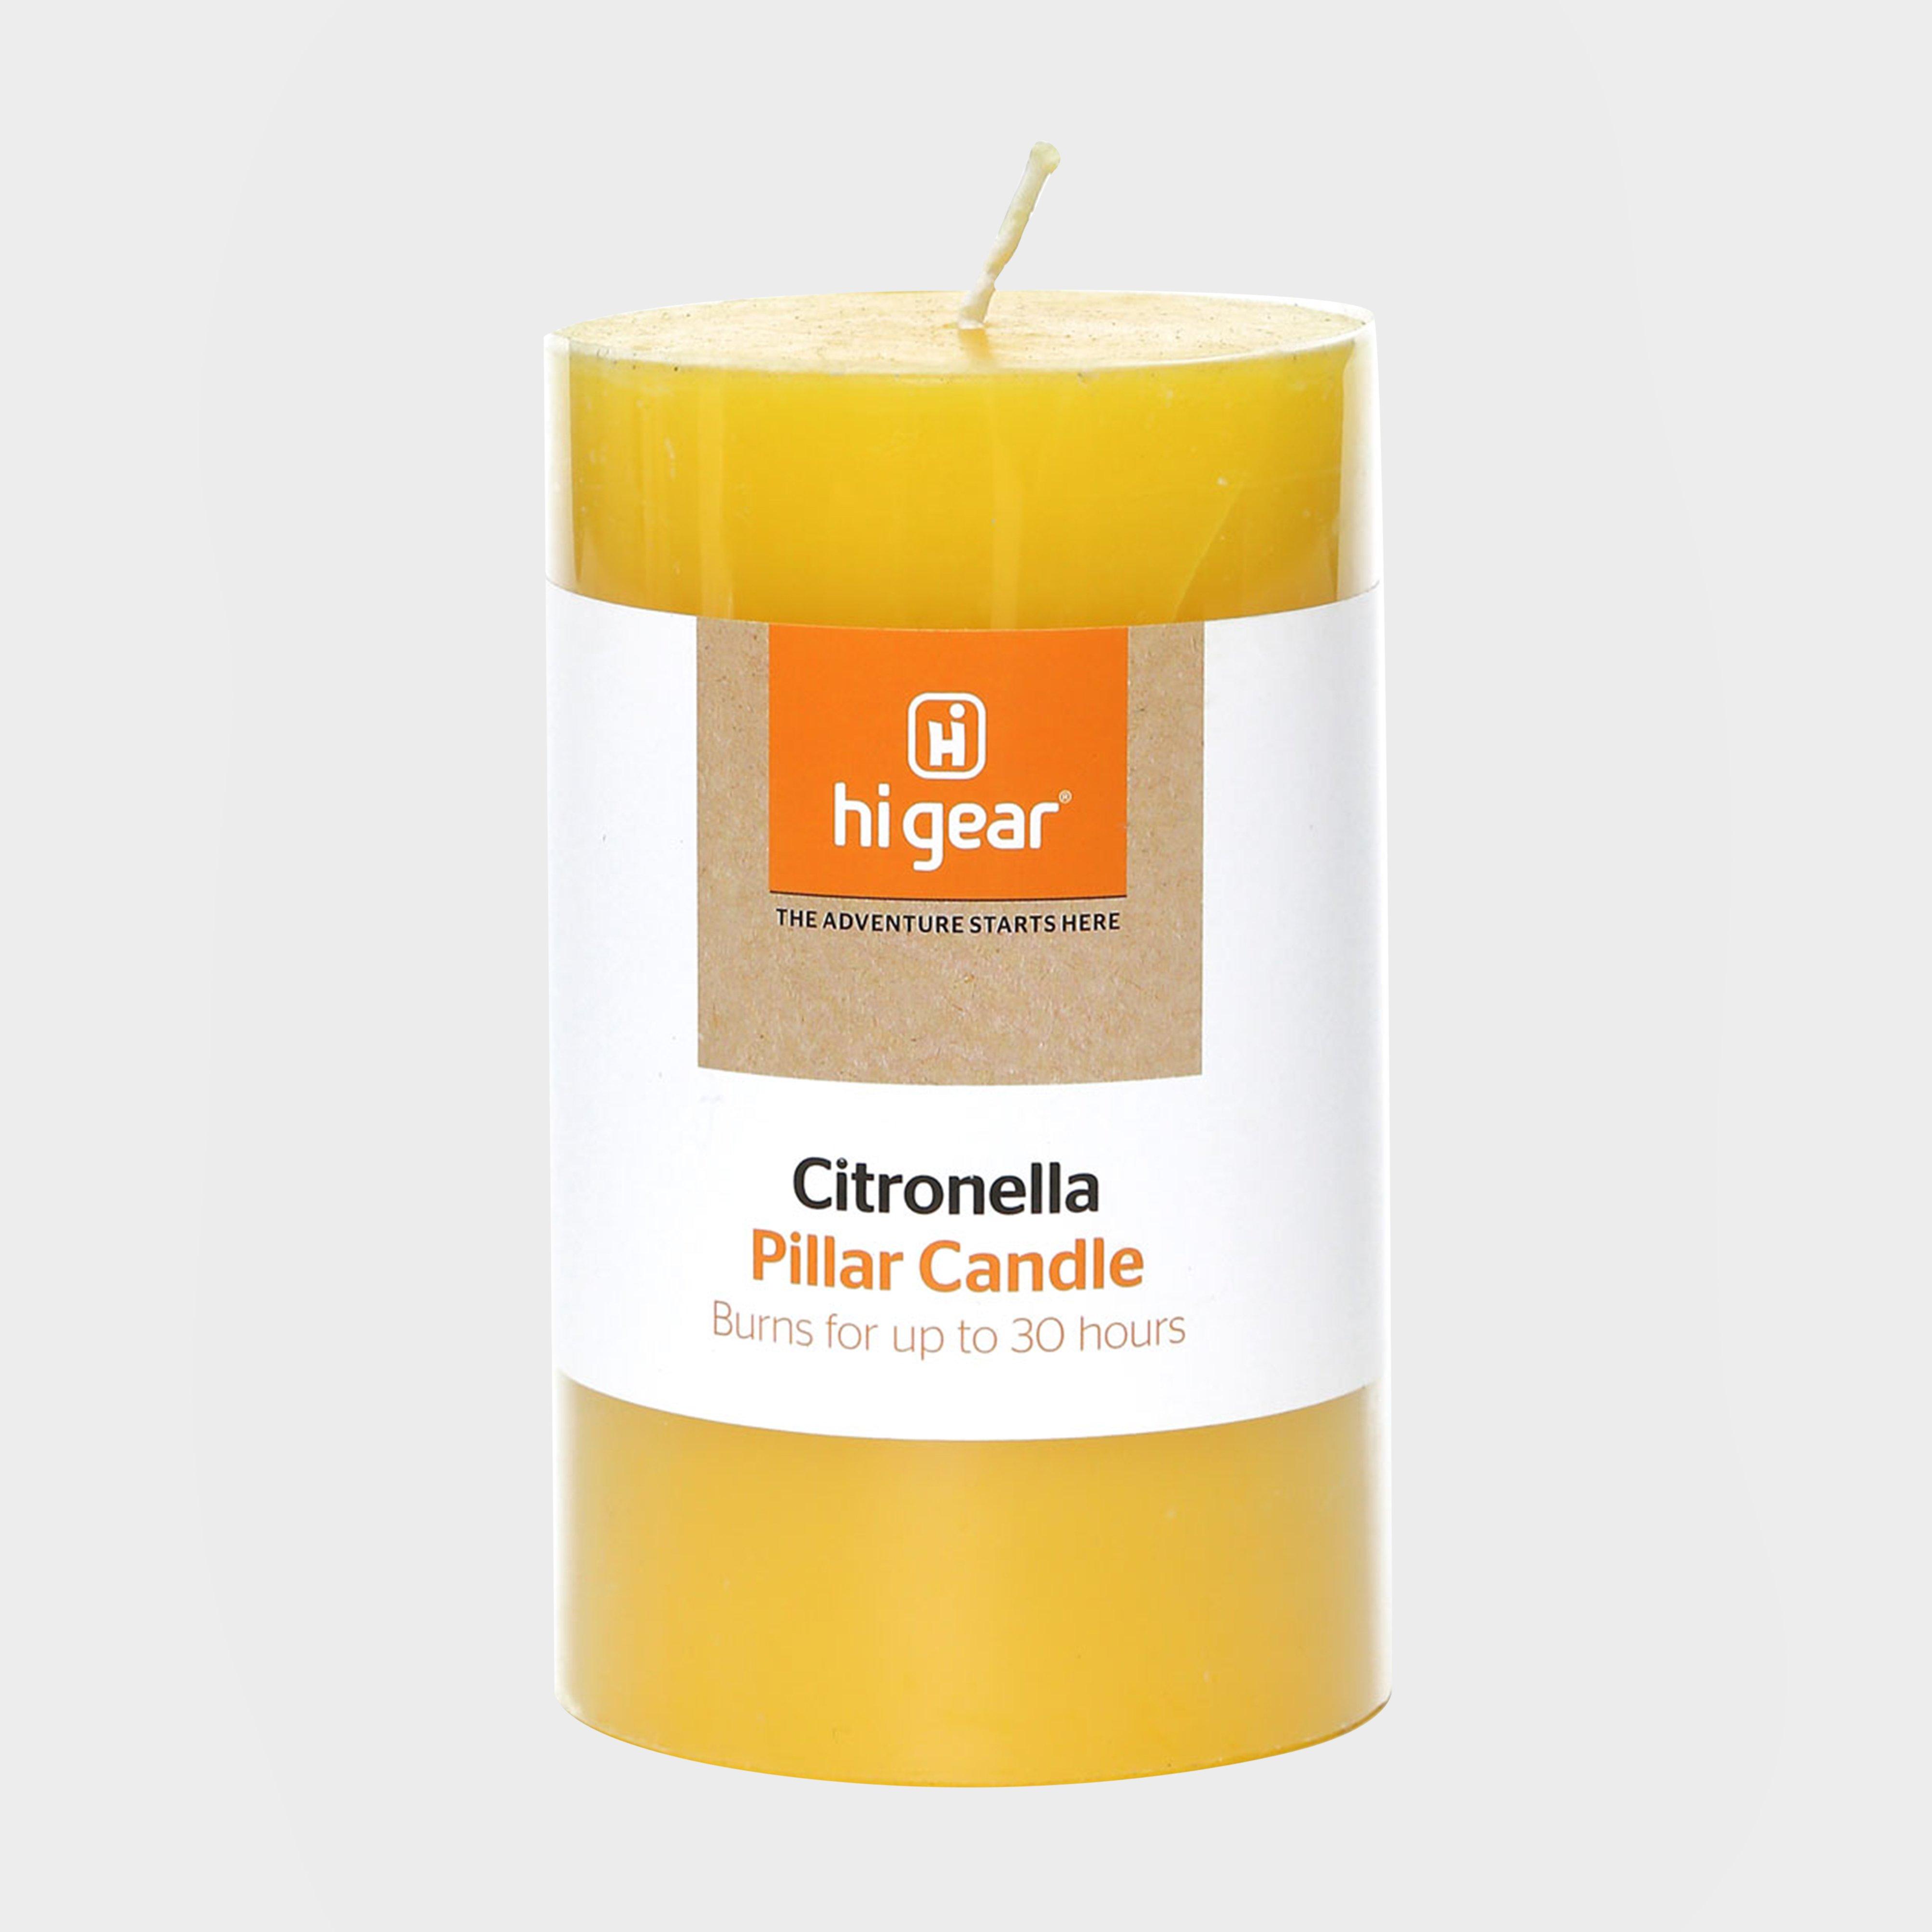 Hi-gear Citronella Pillar Candle  Yellow